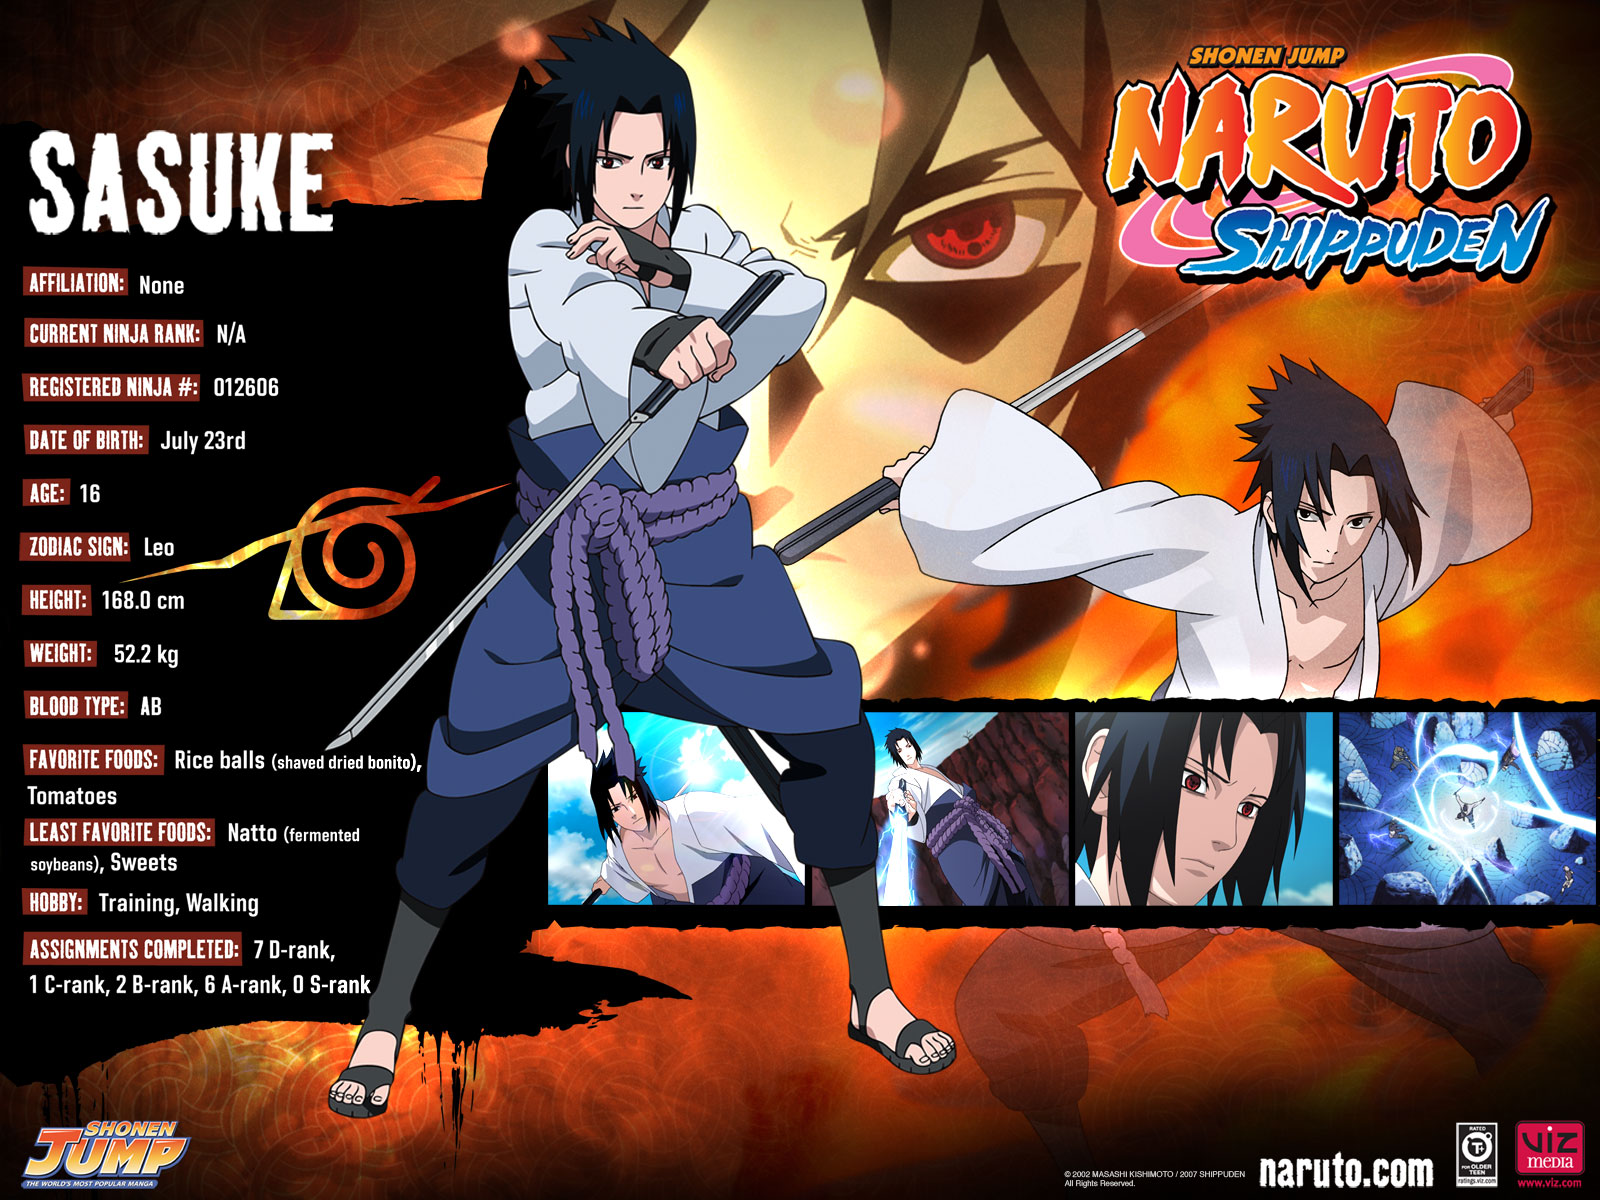 HD Desktop Naruto Shippuden Wallpaper